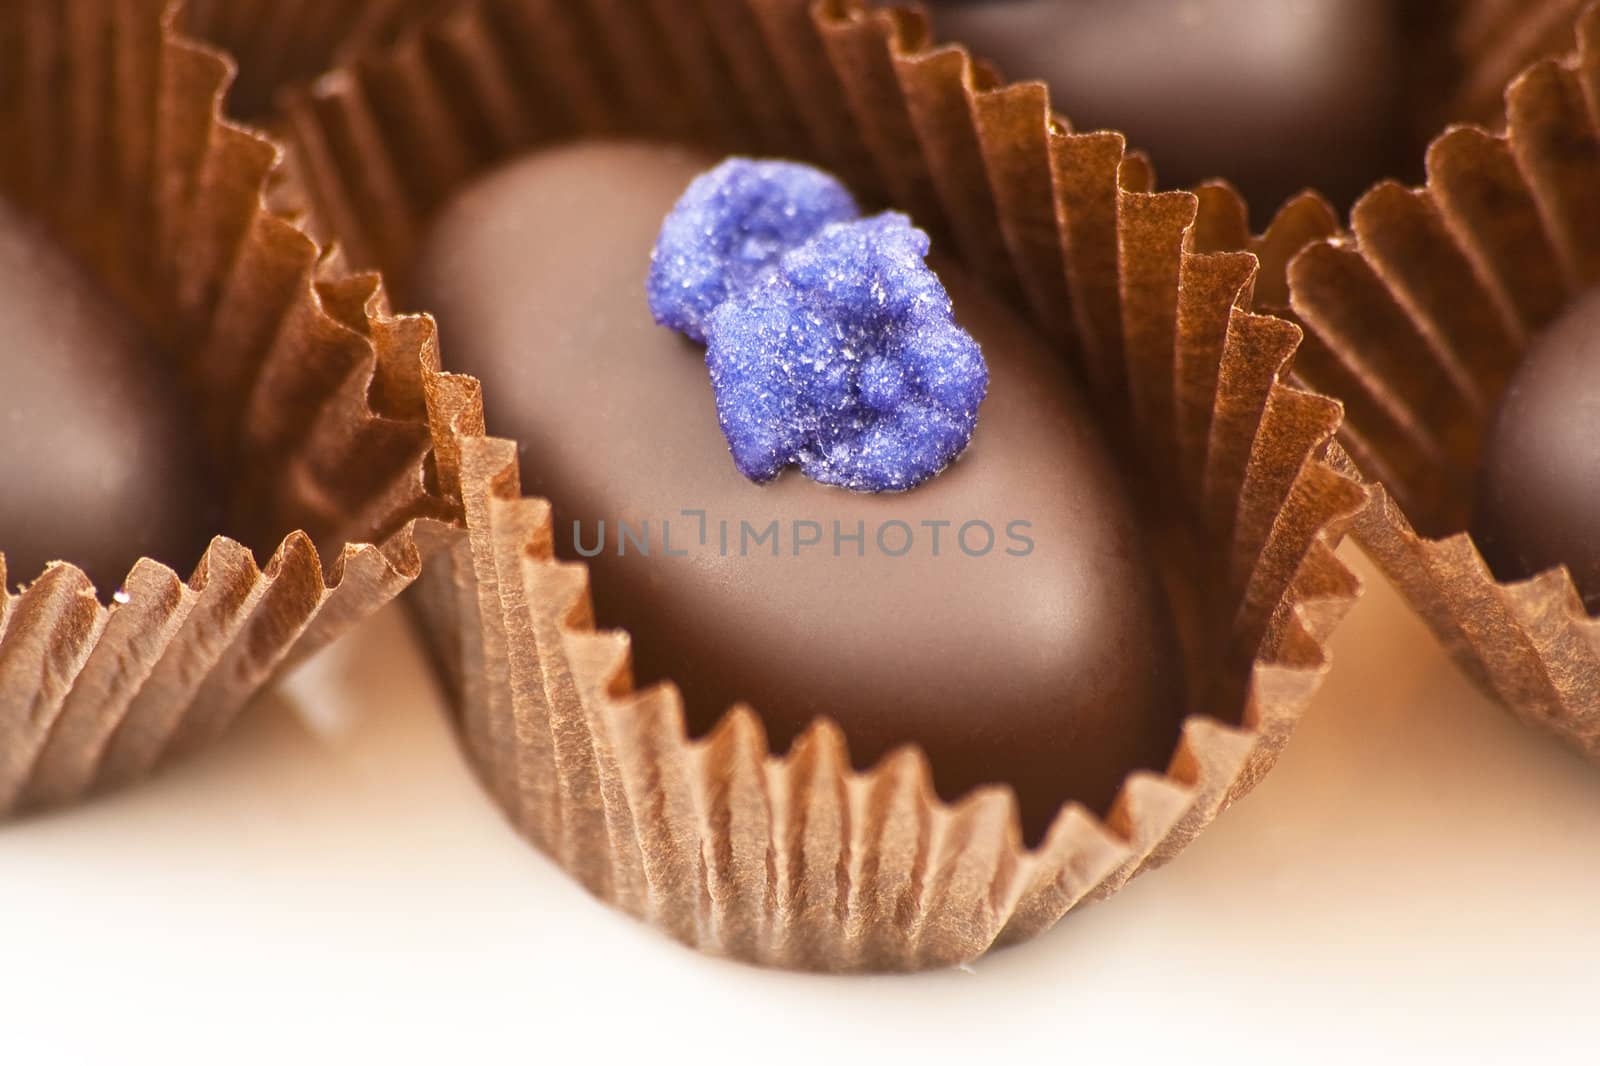 Chocolates by darkhorse2012